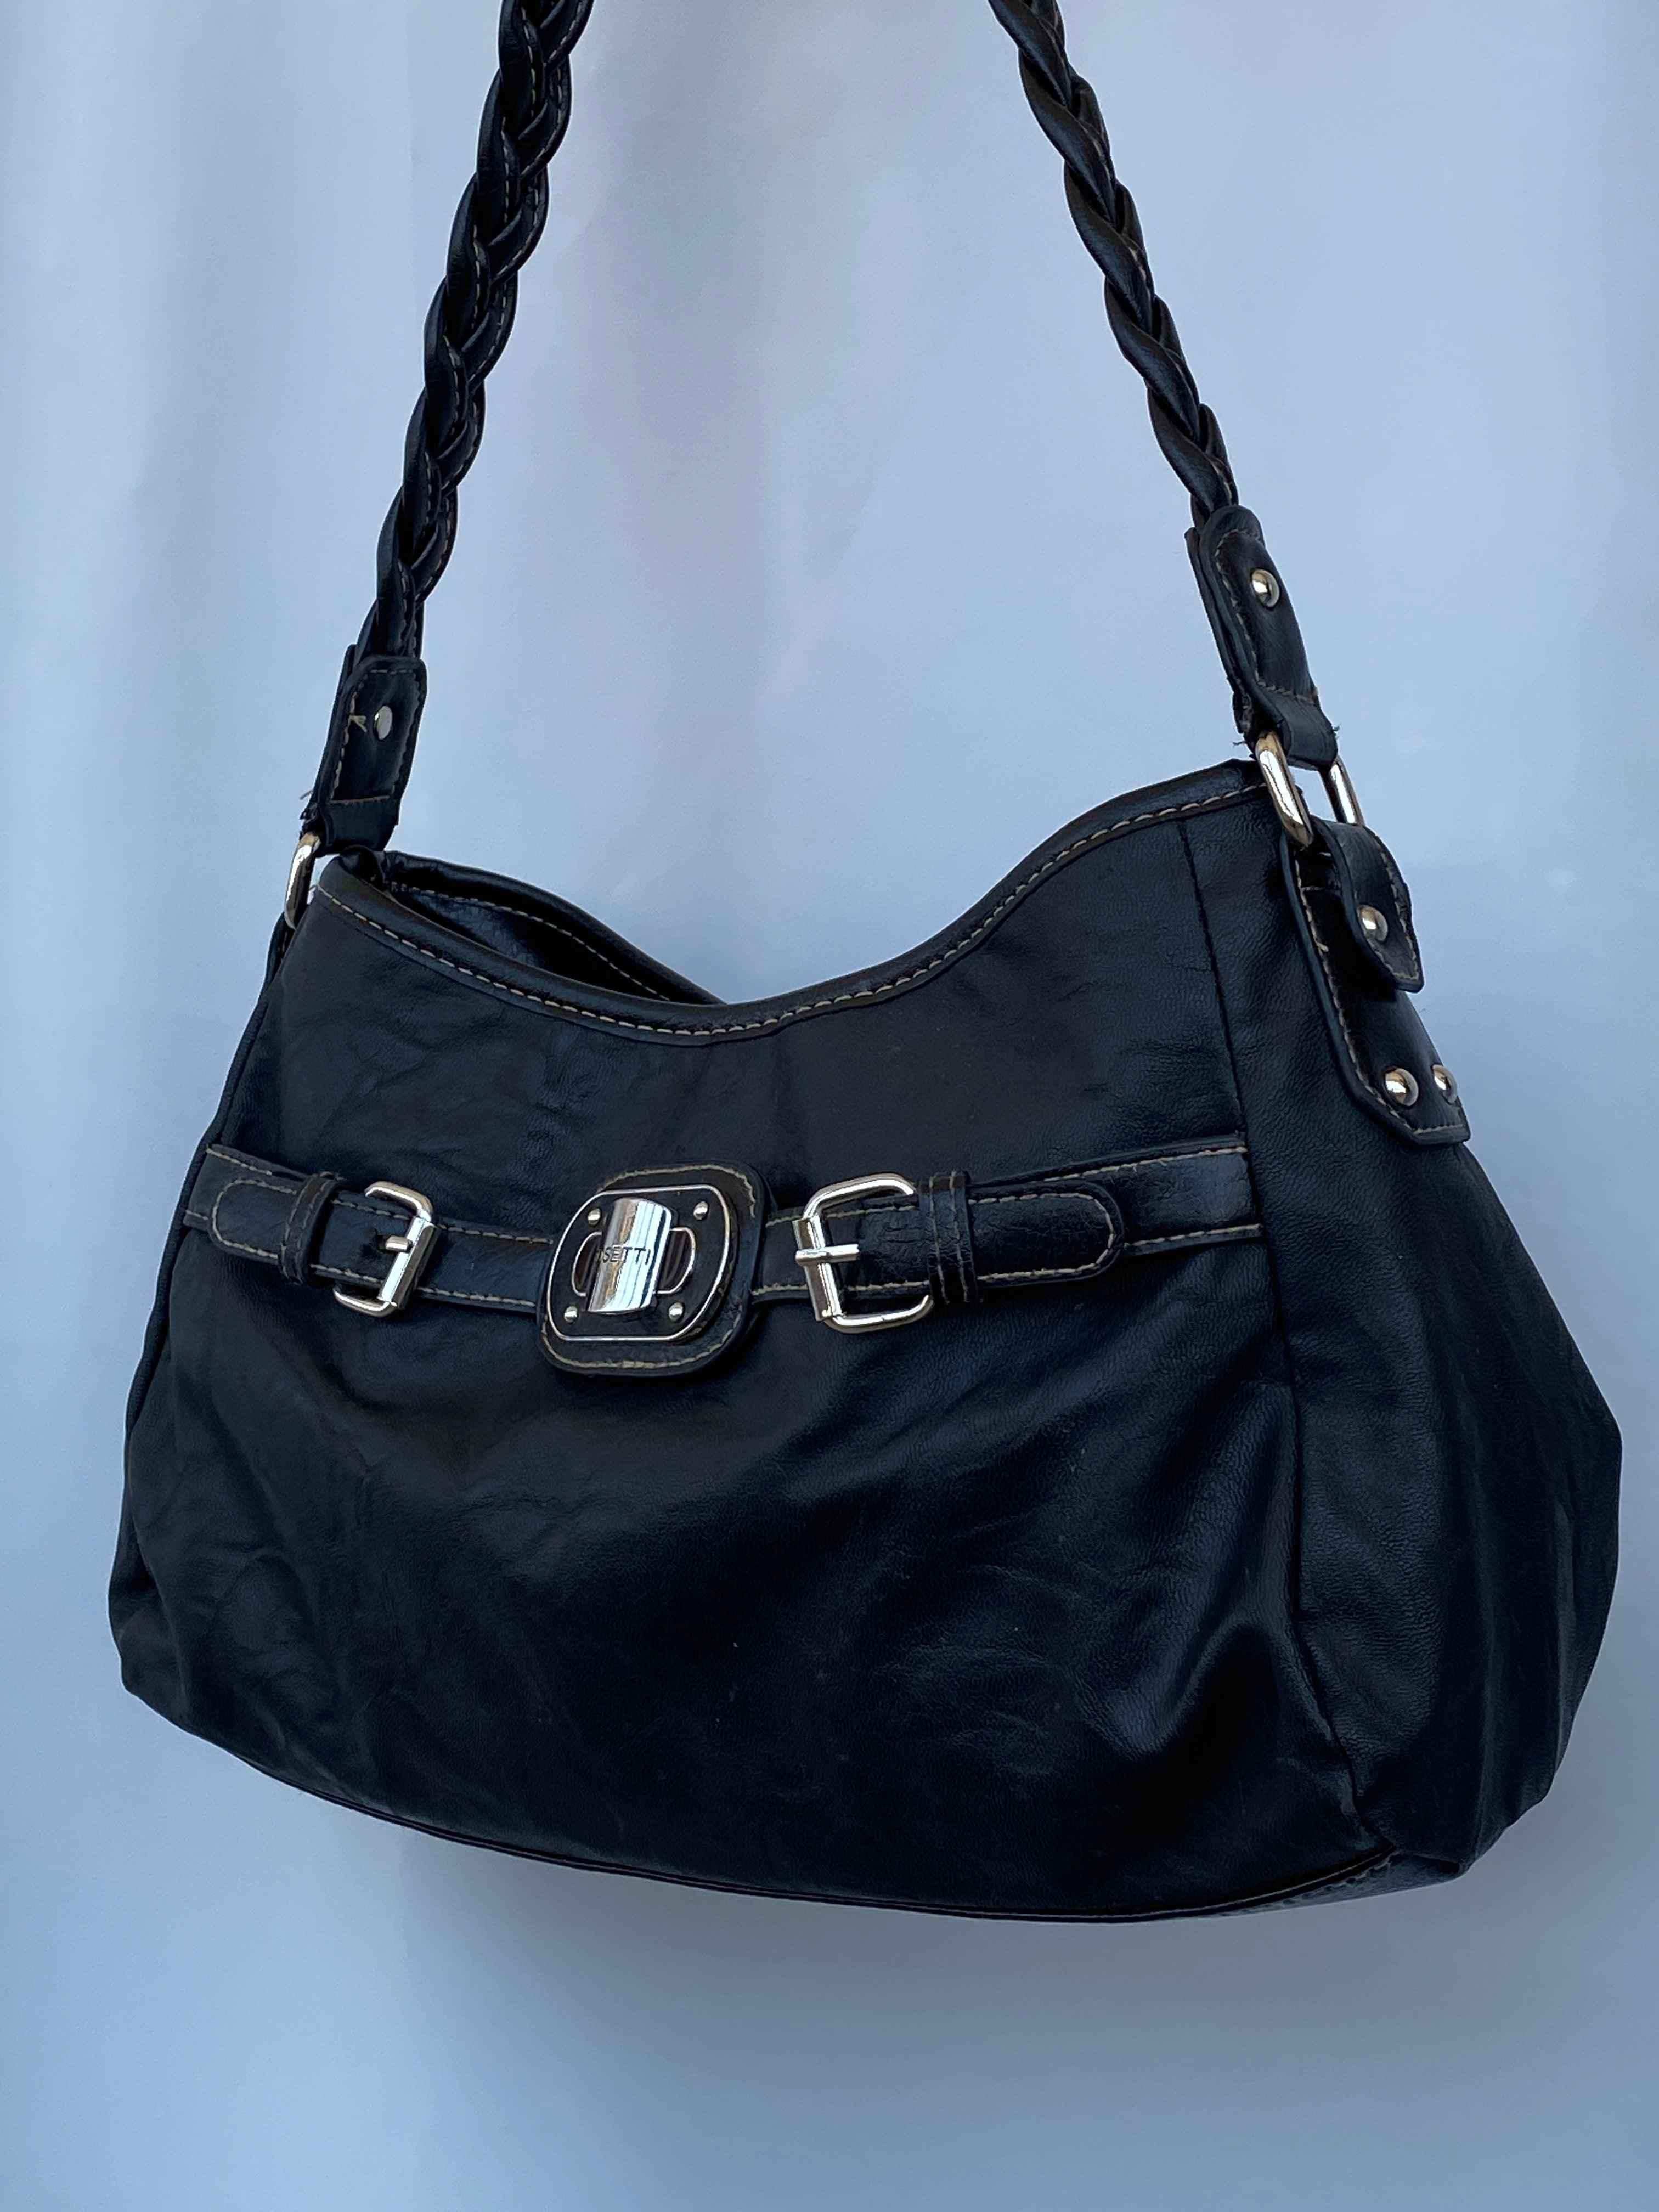 Buy Rosetti Molly Mini Bag, Black at Amazon.in